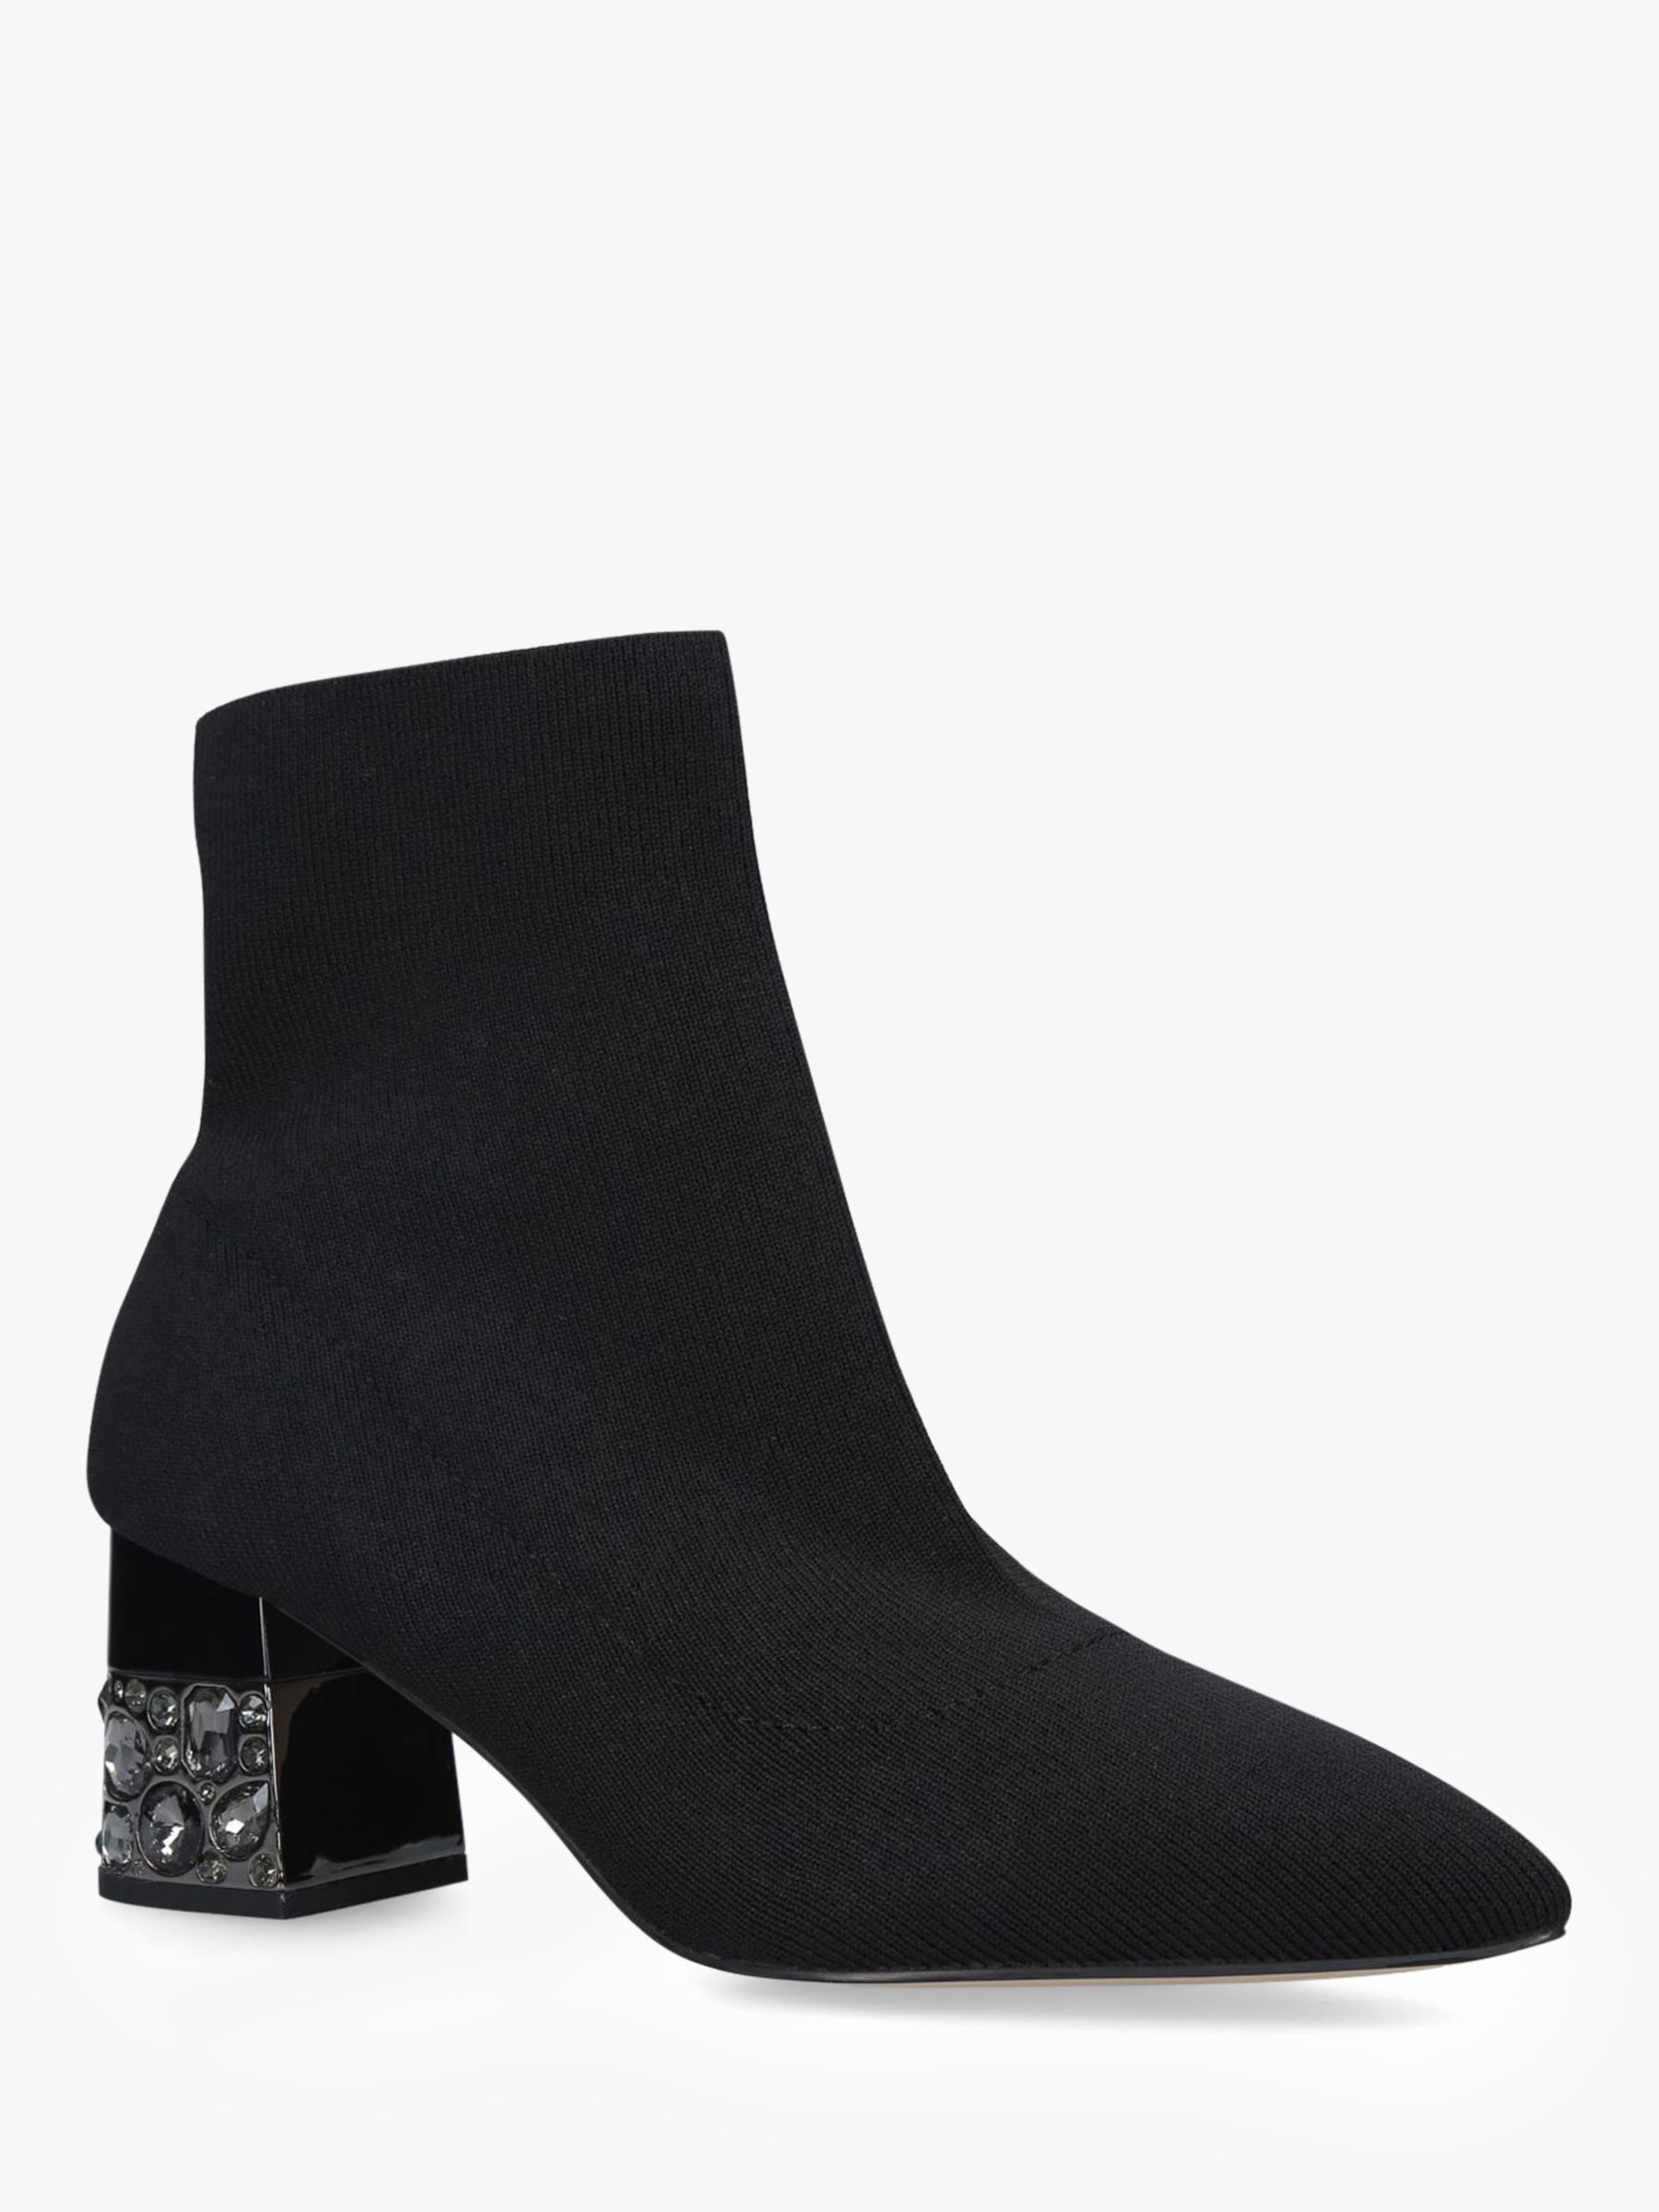 Carvela Kingpin Block Heel Sock Ankle Boots, Black